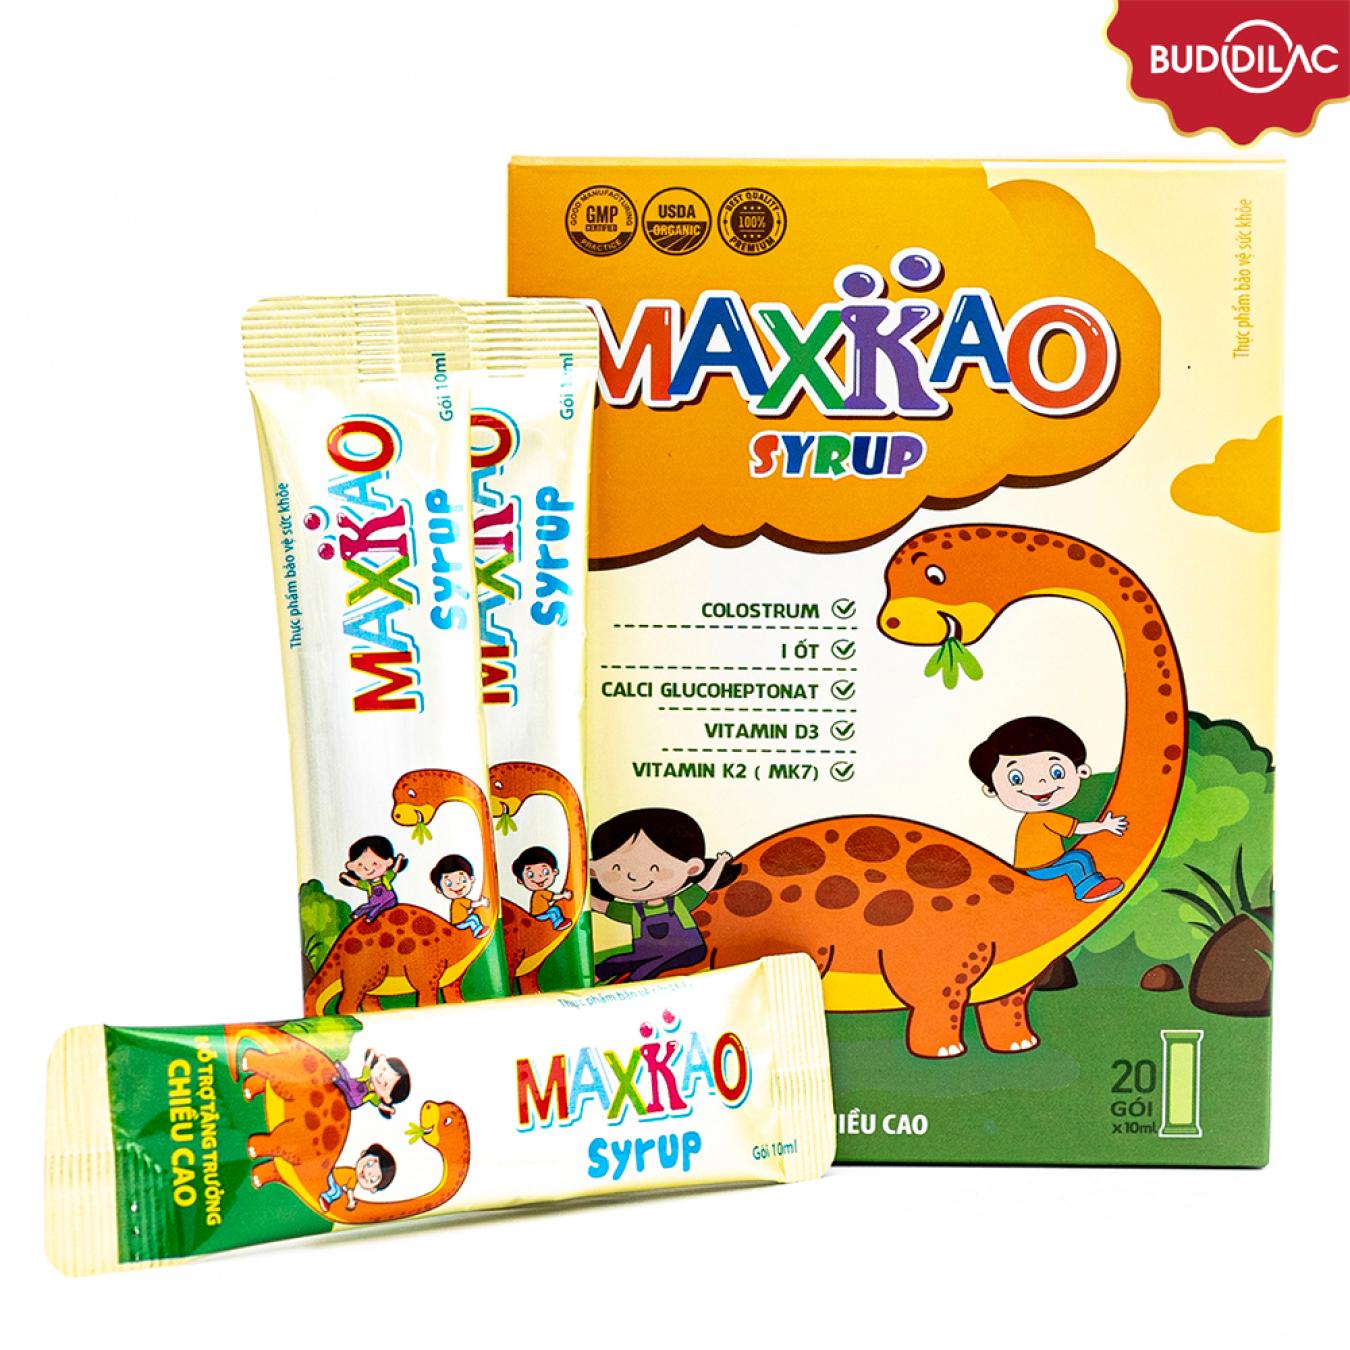 Maxkao Syrup - Hỗ trợ trẻ tăng chiều cao